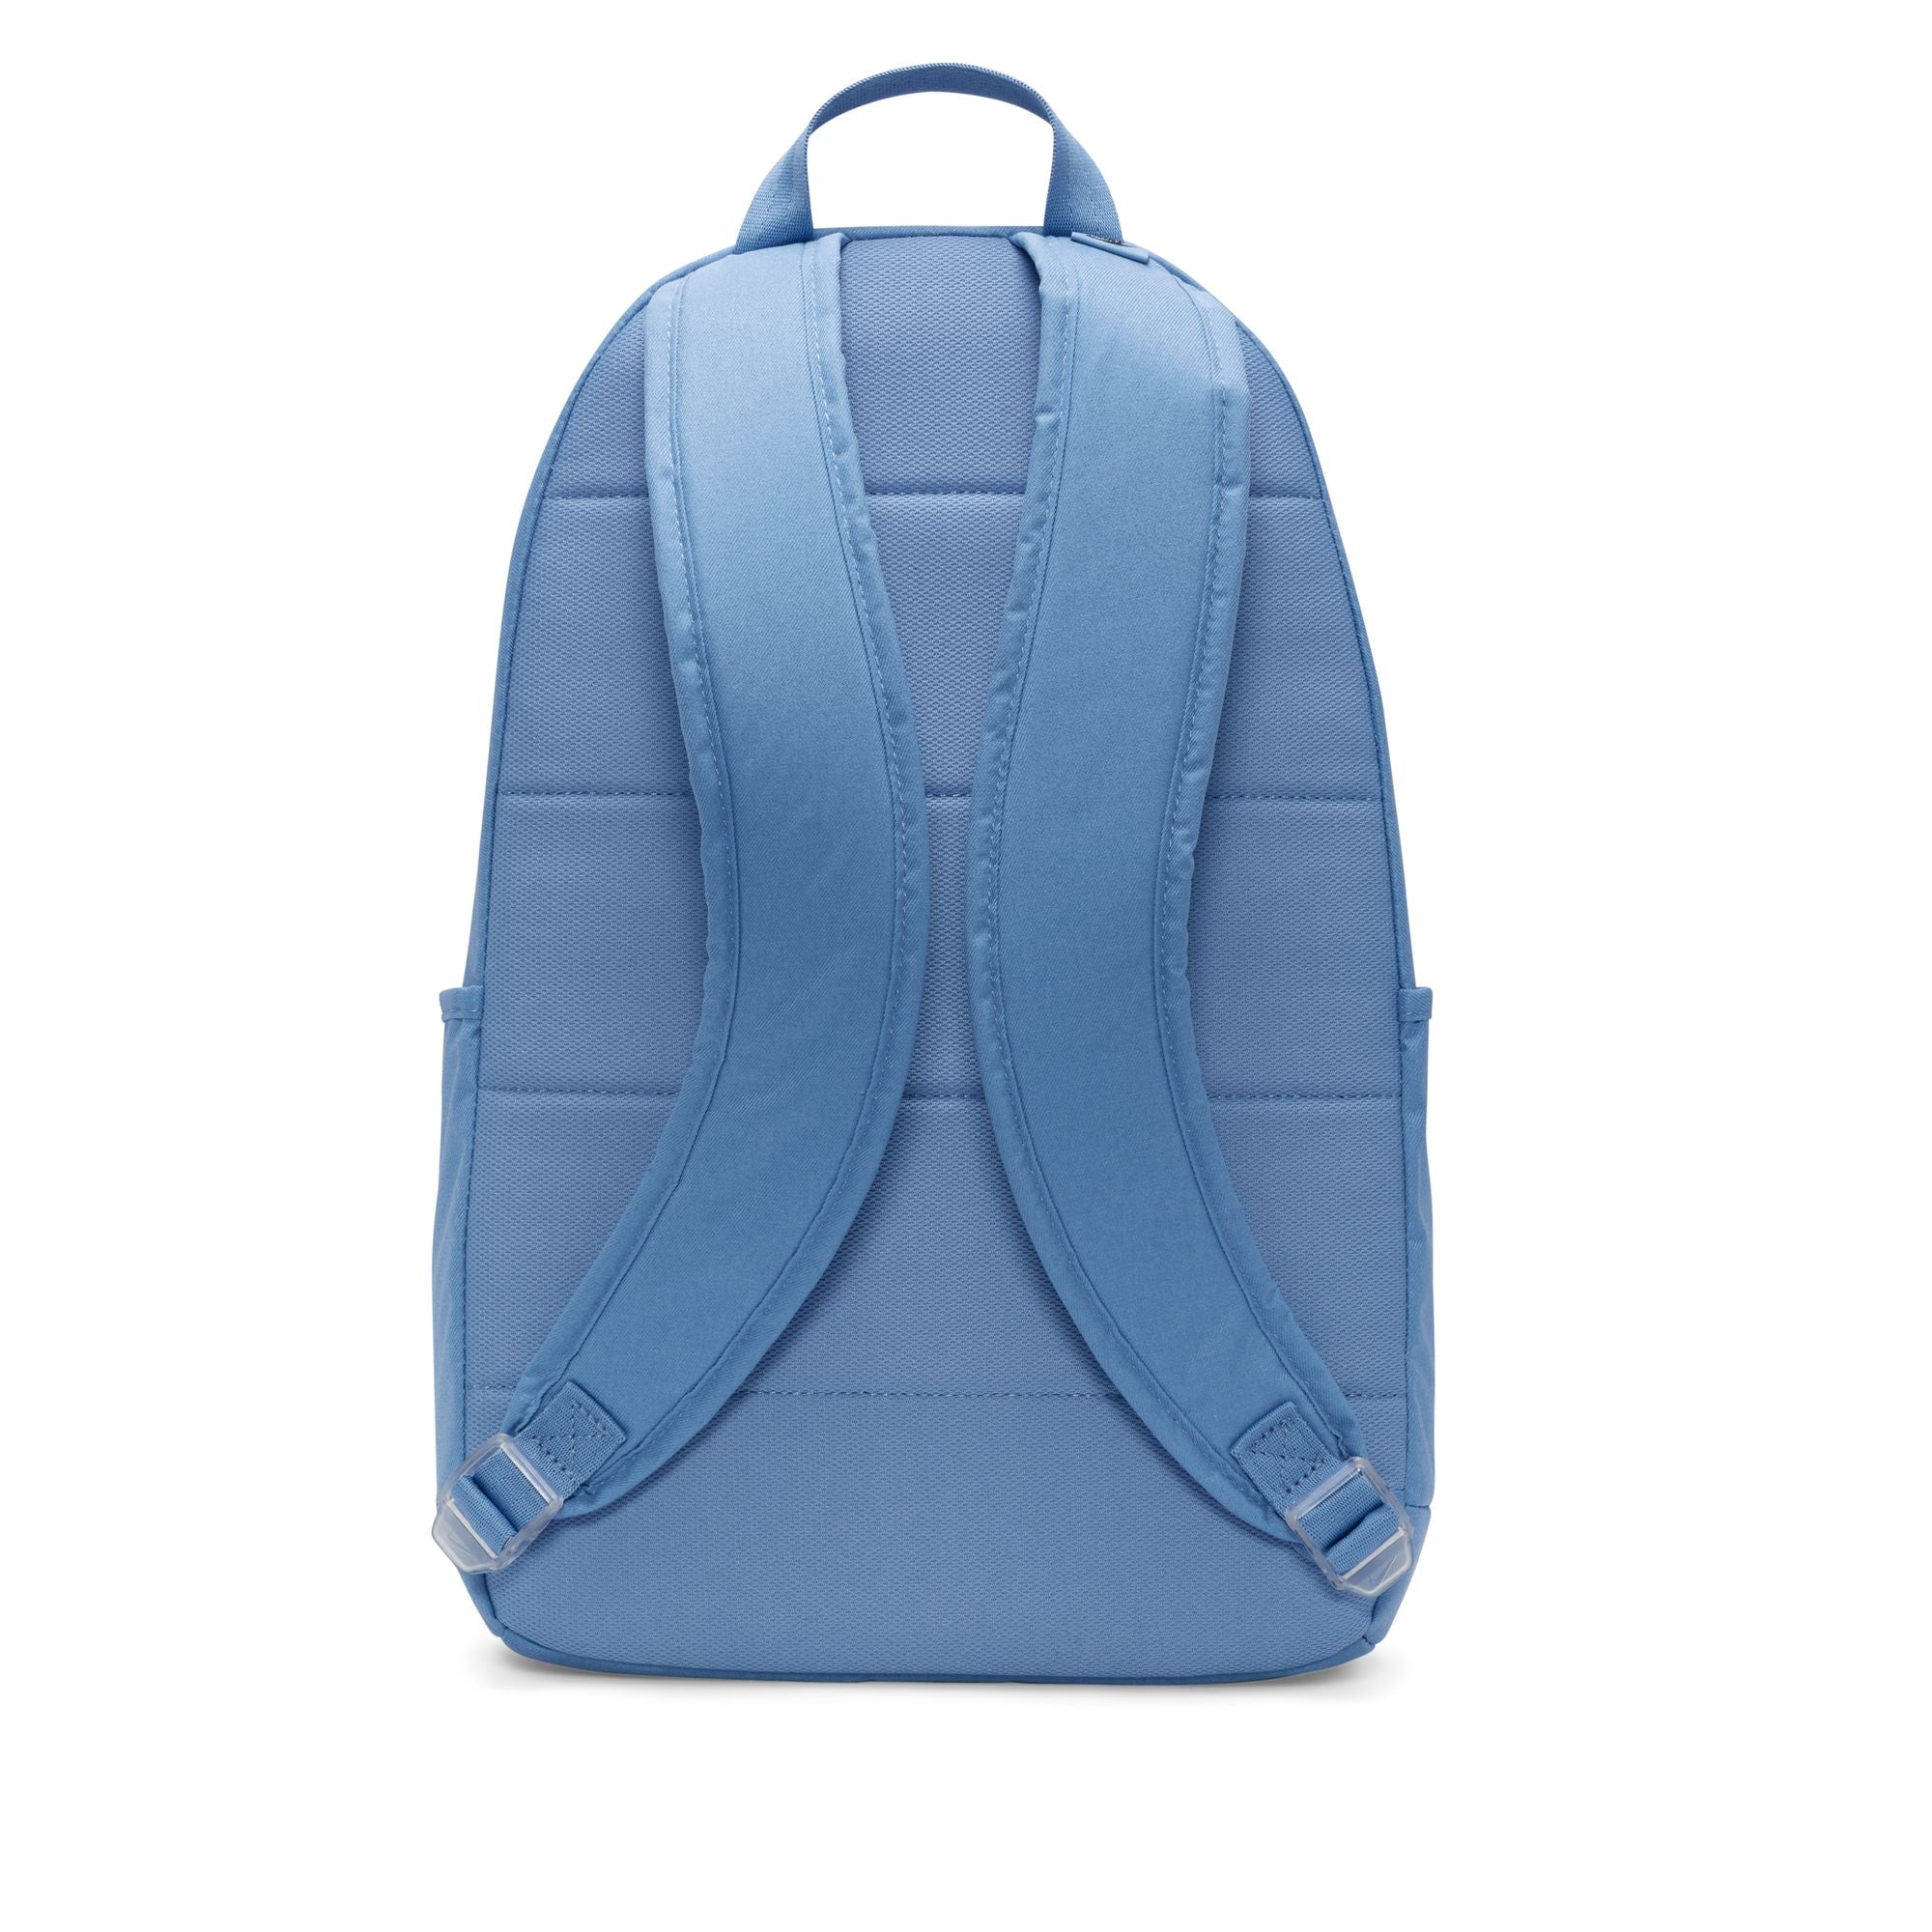 Nike Elemental Premium Backpack - Polar/Polar/Black